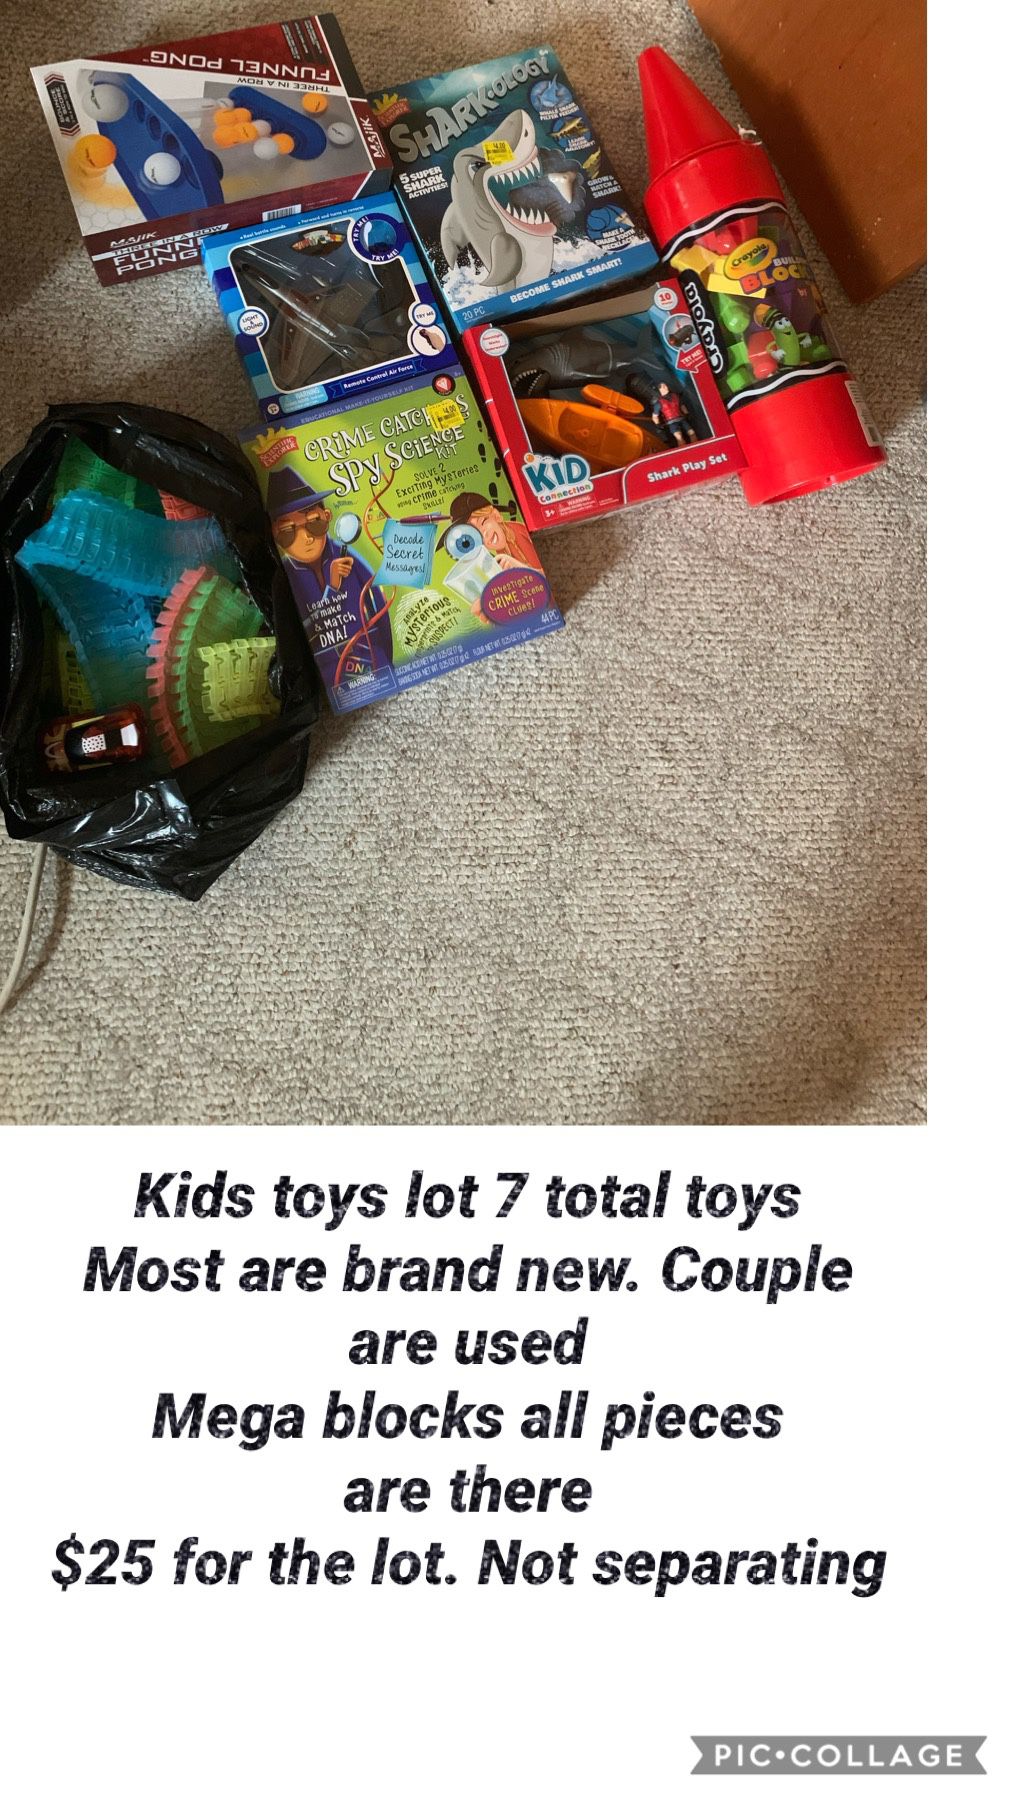 Kids toy lot